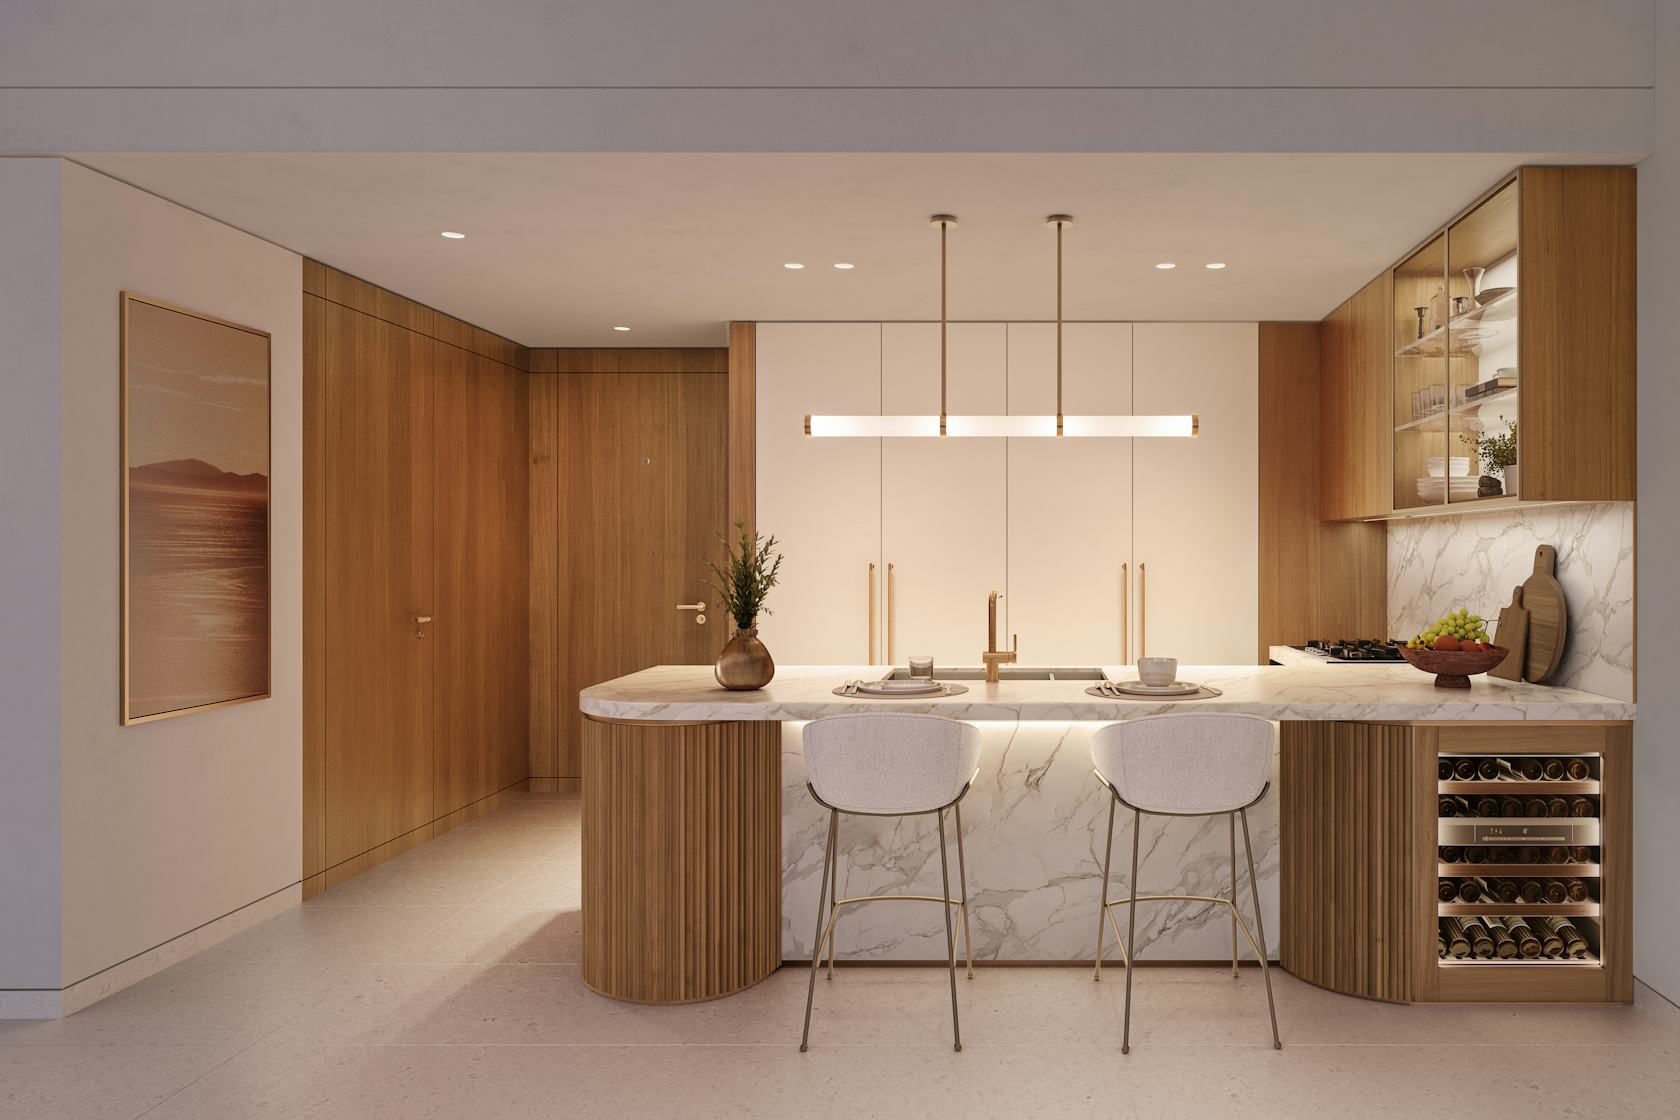 interior design indoors kitchen wood panels kitchen island